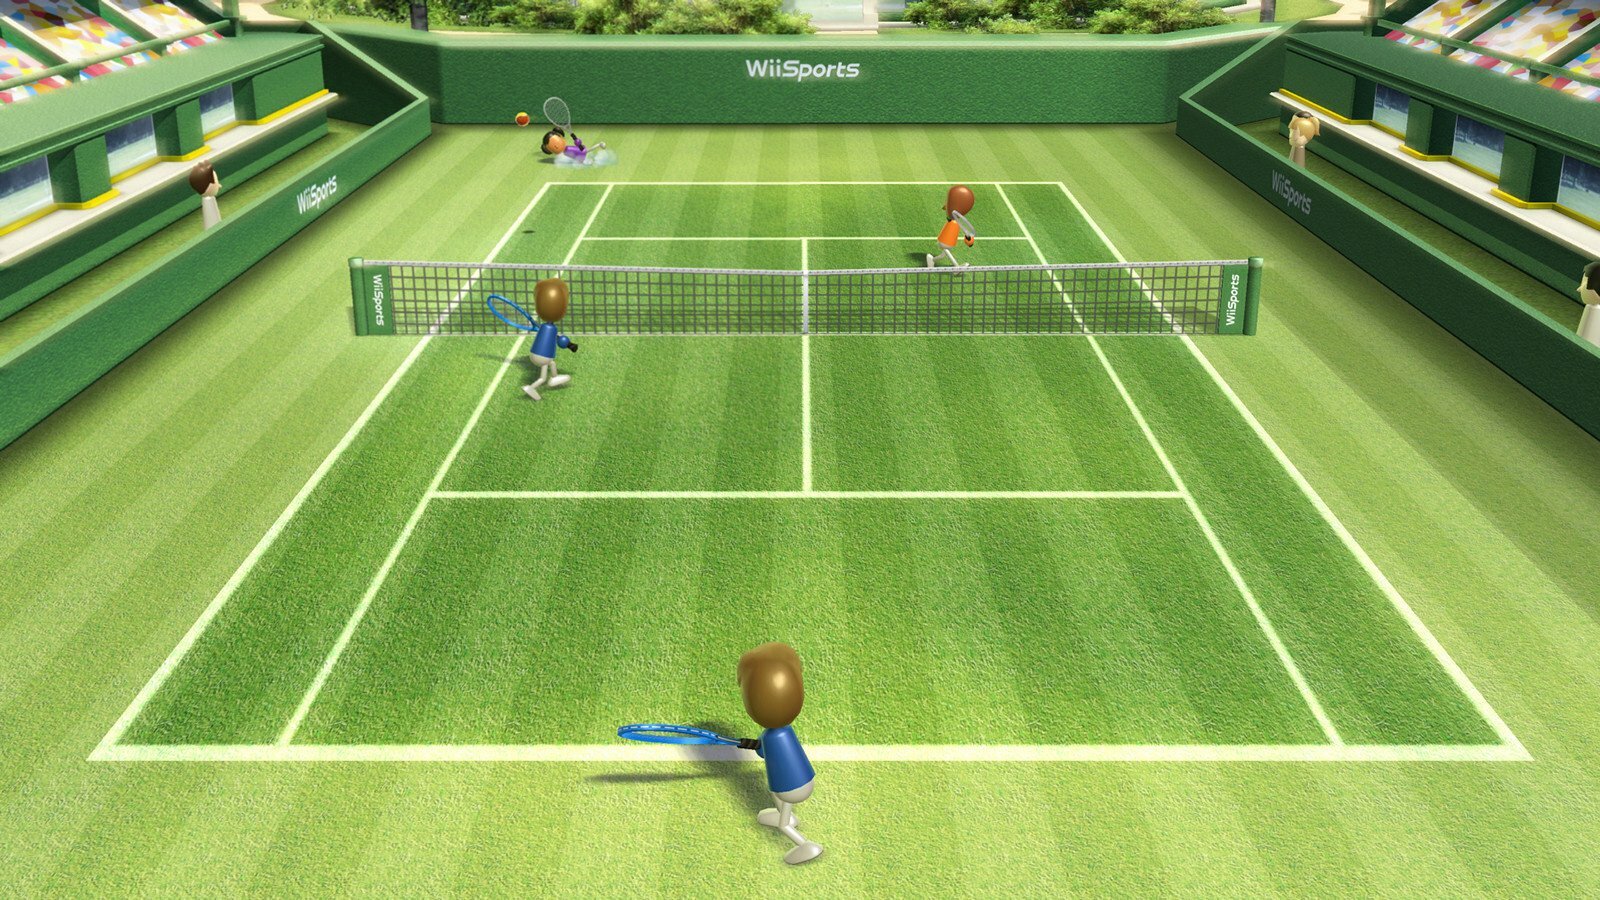 Wii Sports gameplay